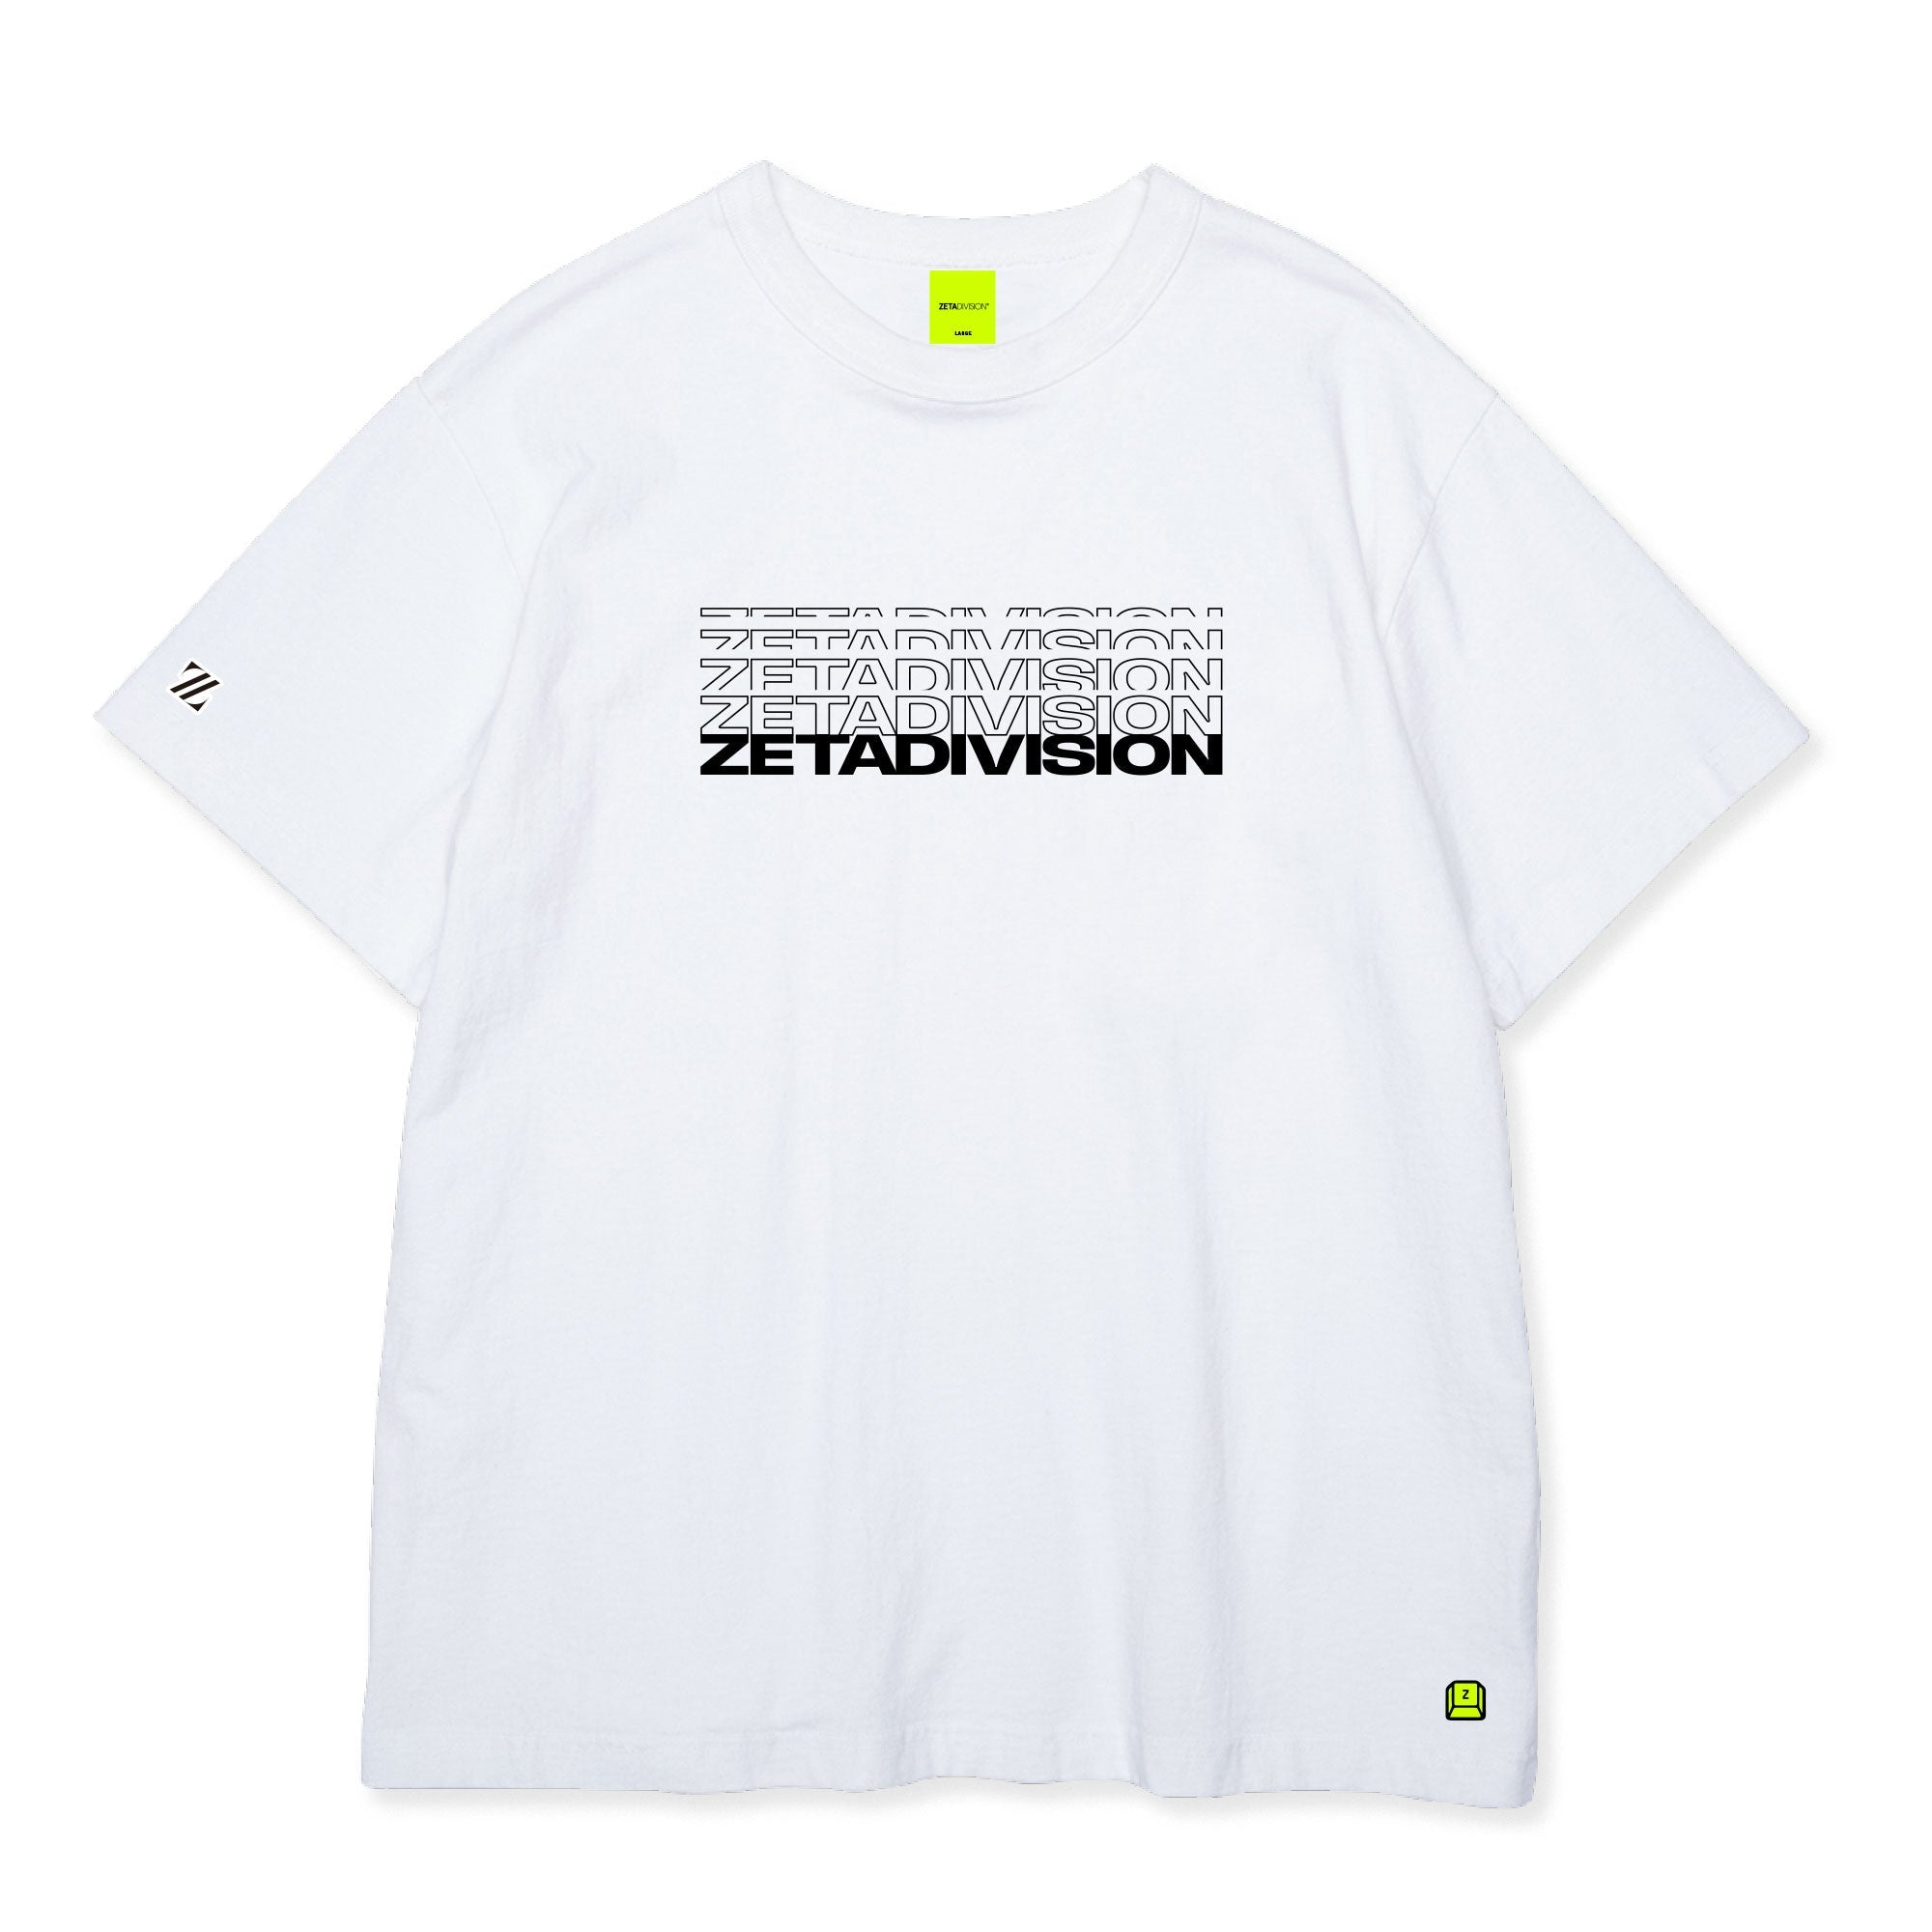 Sサイズ)zeta division AWP: DROPOUT TEE. - メンズファッション